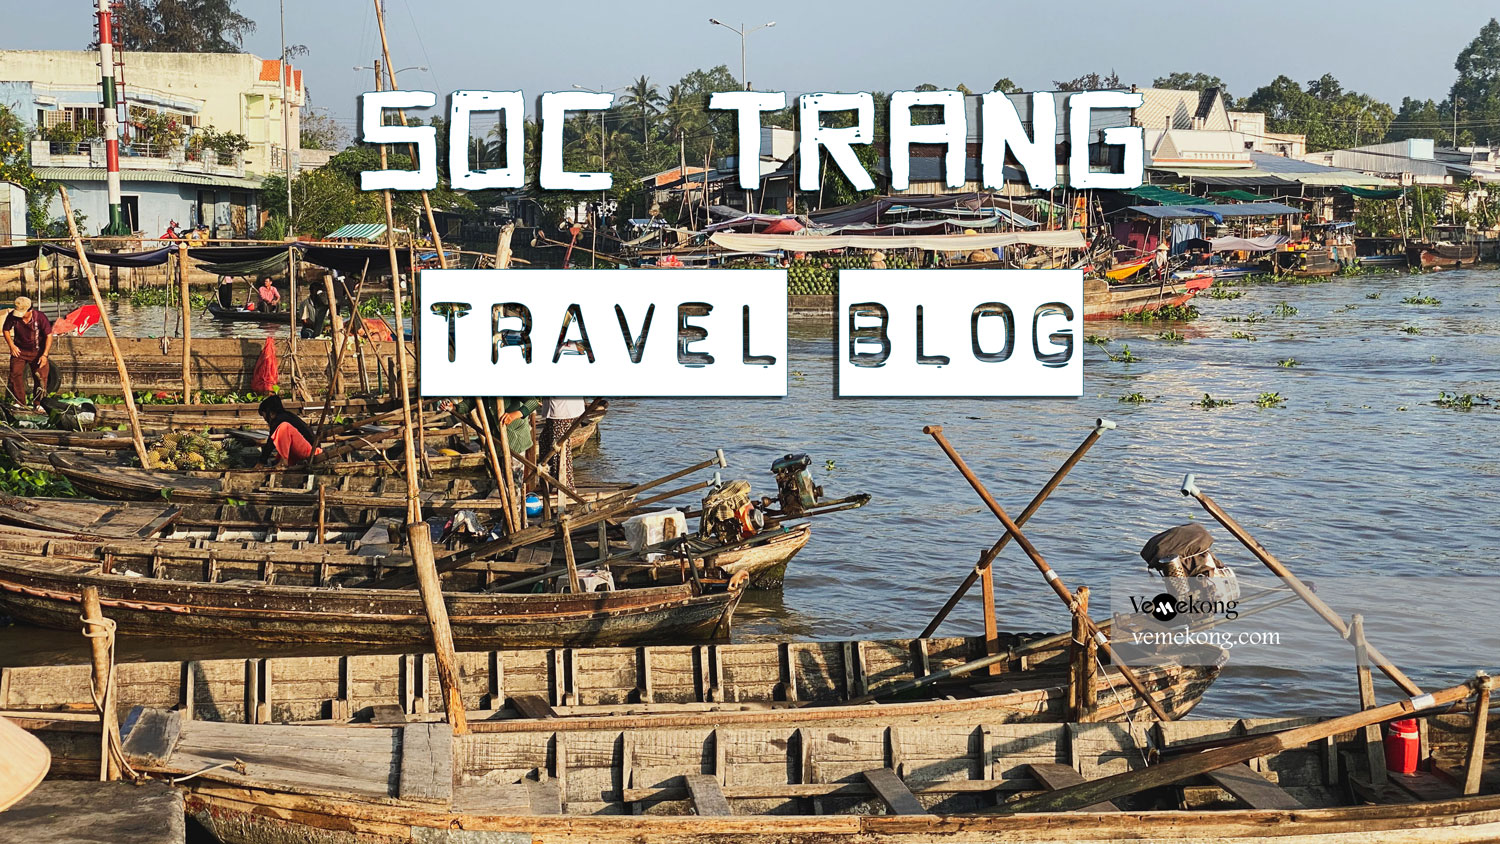 Soc Trang Travel Blog – How to Spend 3 Days in Soc Trang, Vietnam